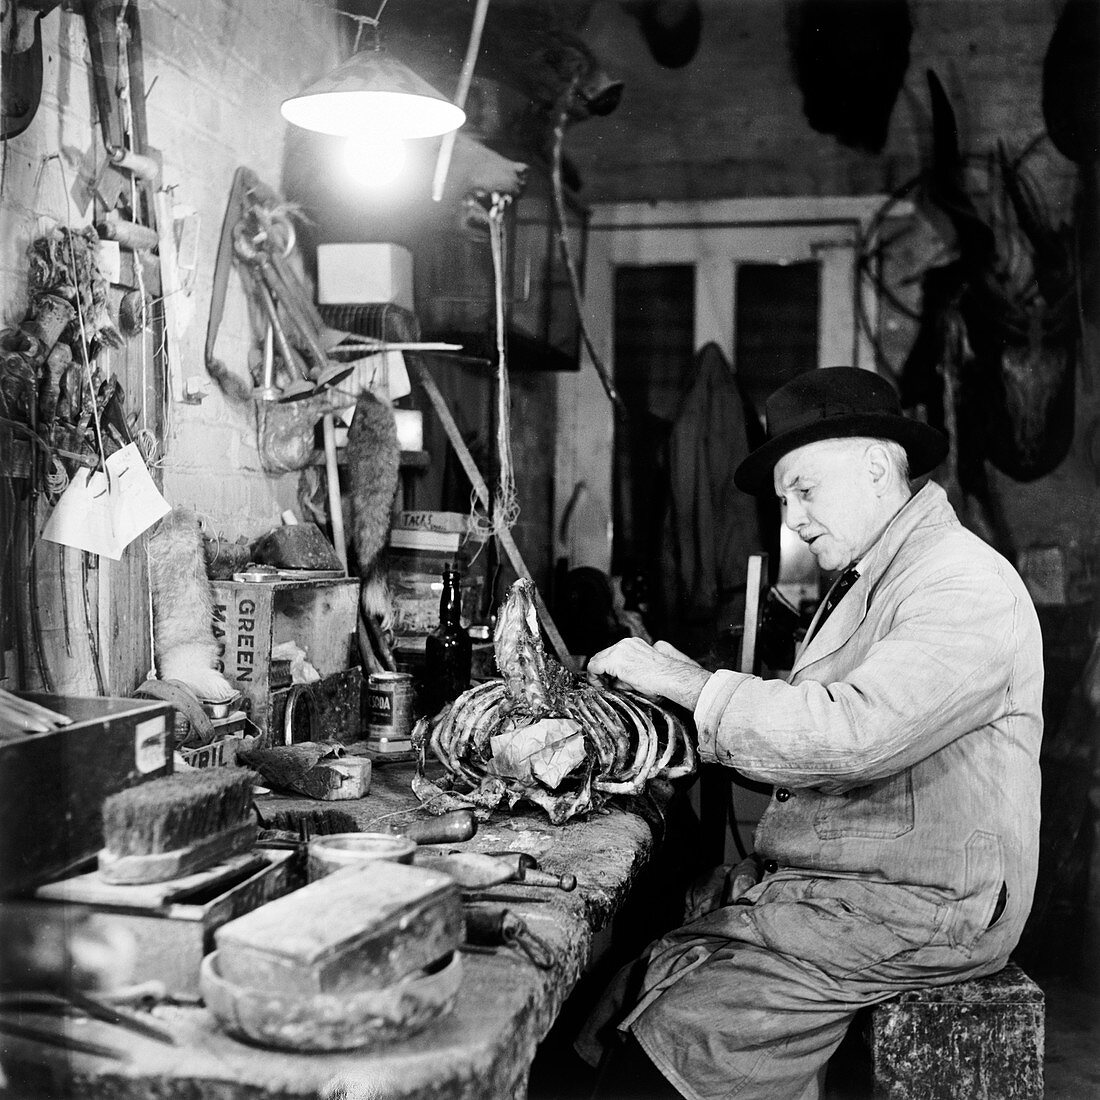 Taxidermist, London, 1951